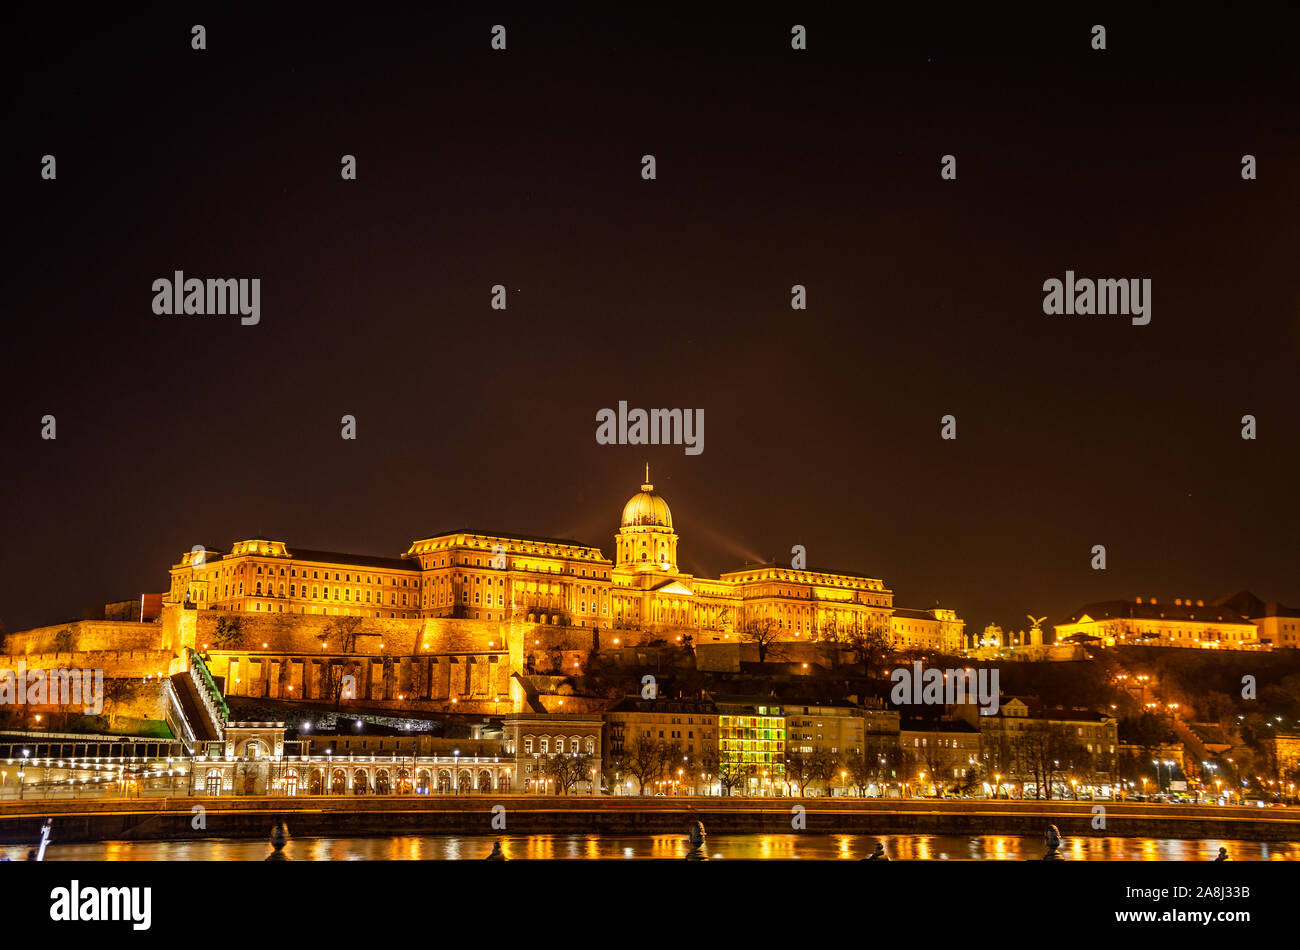 Buda Castle or Royal Palace in Budapest, Hungary Illuminated at Night Stock Photo